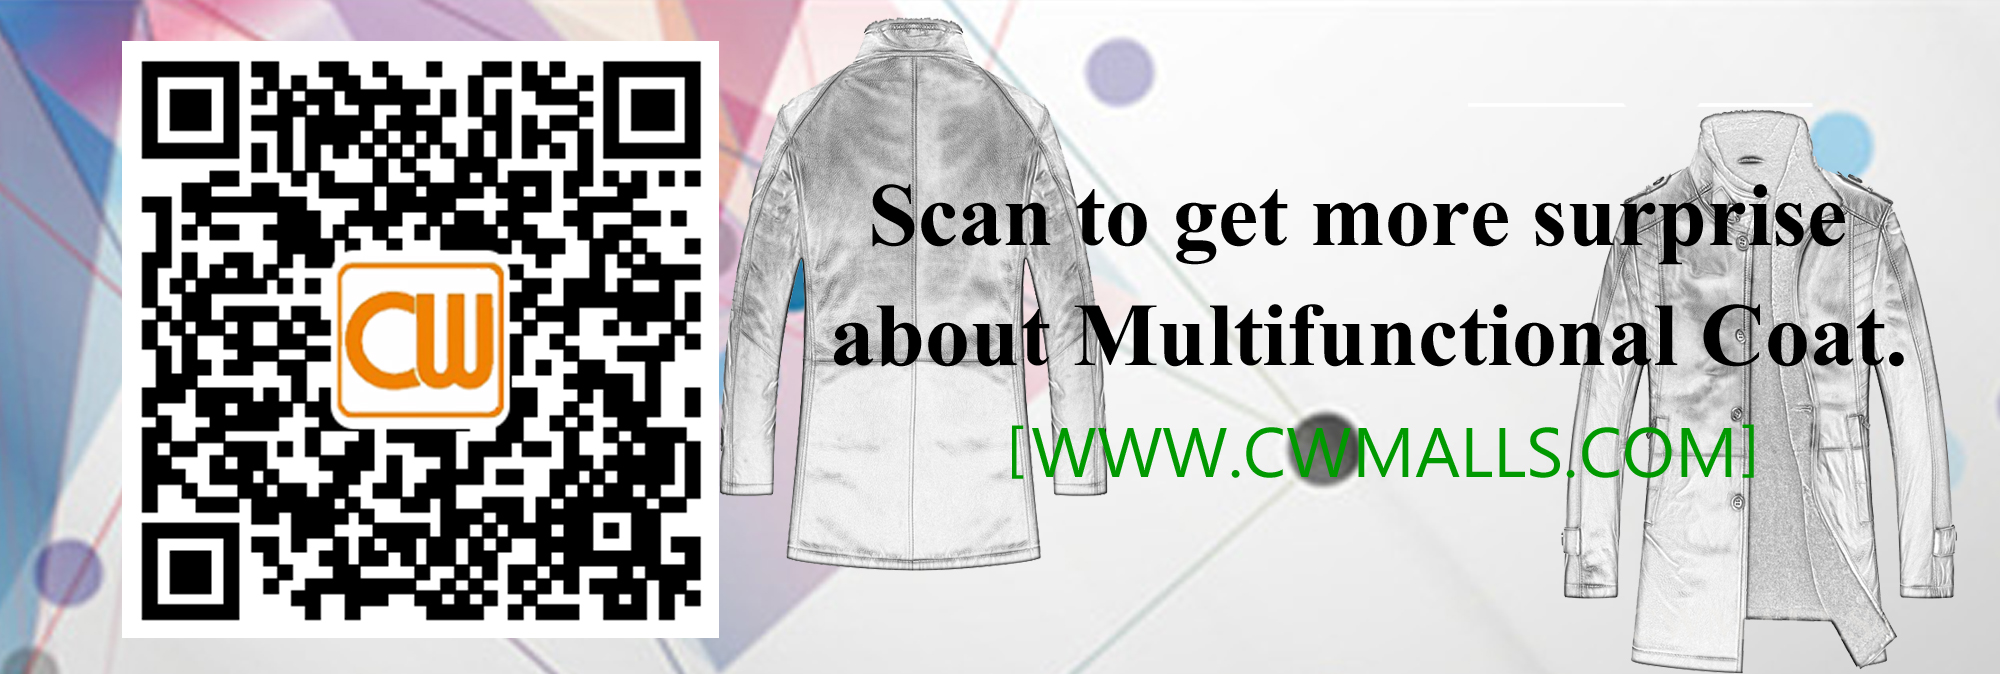 Multifunctional Coat QR.jpg